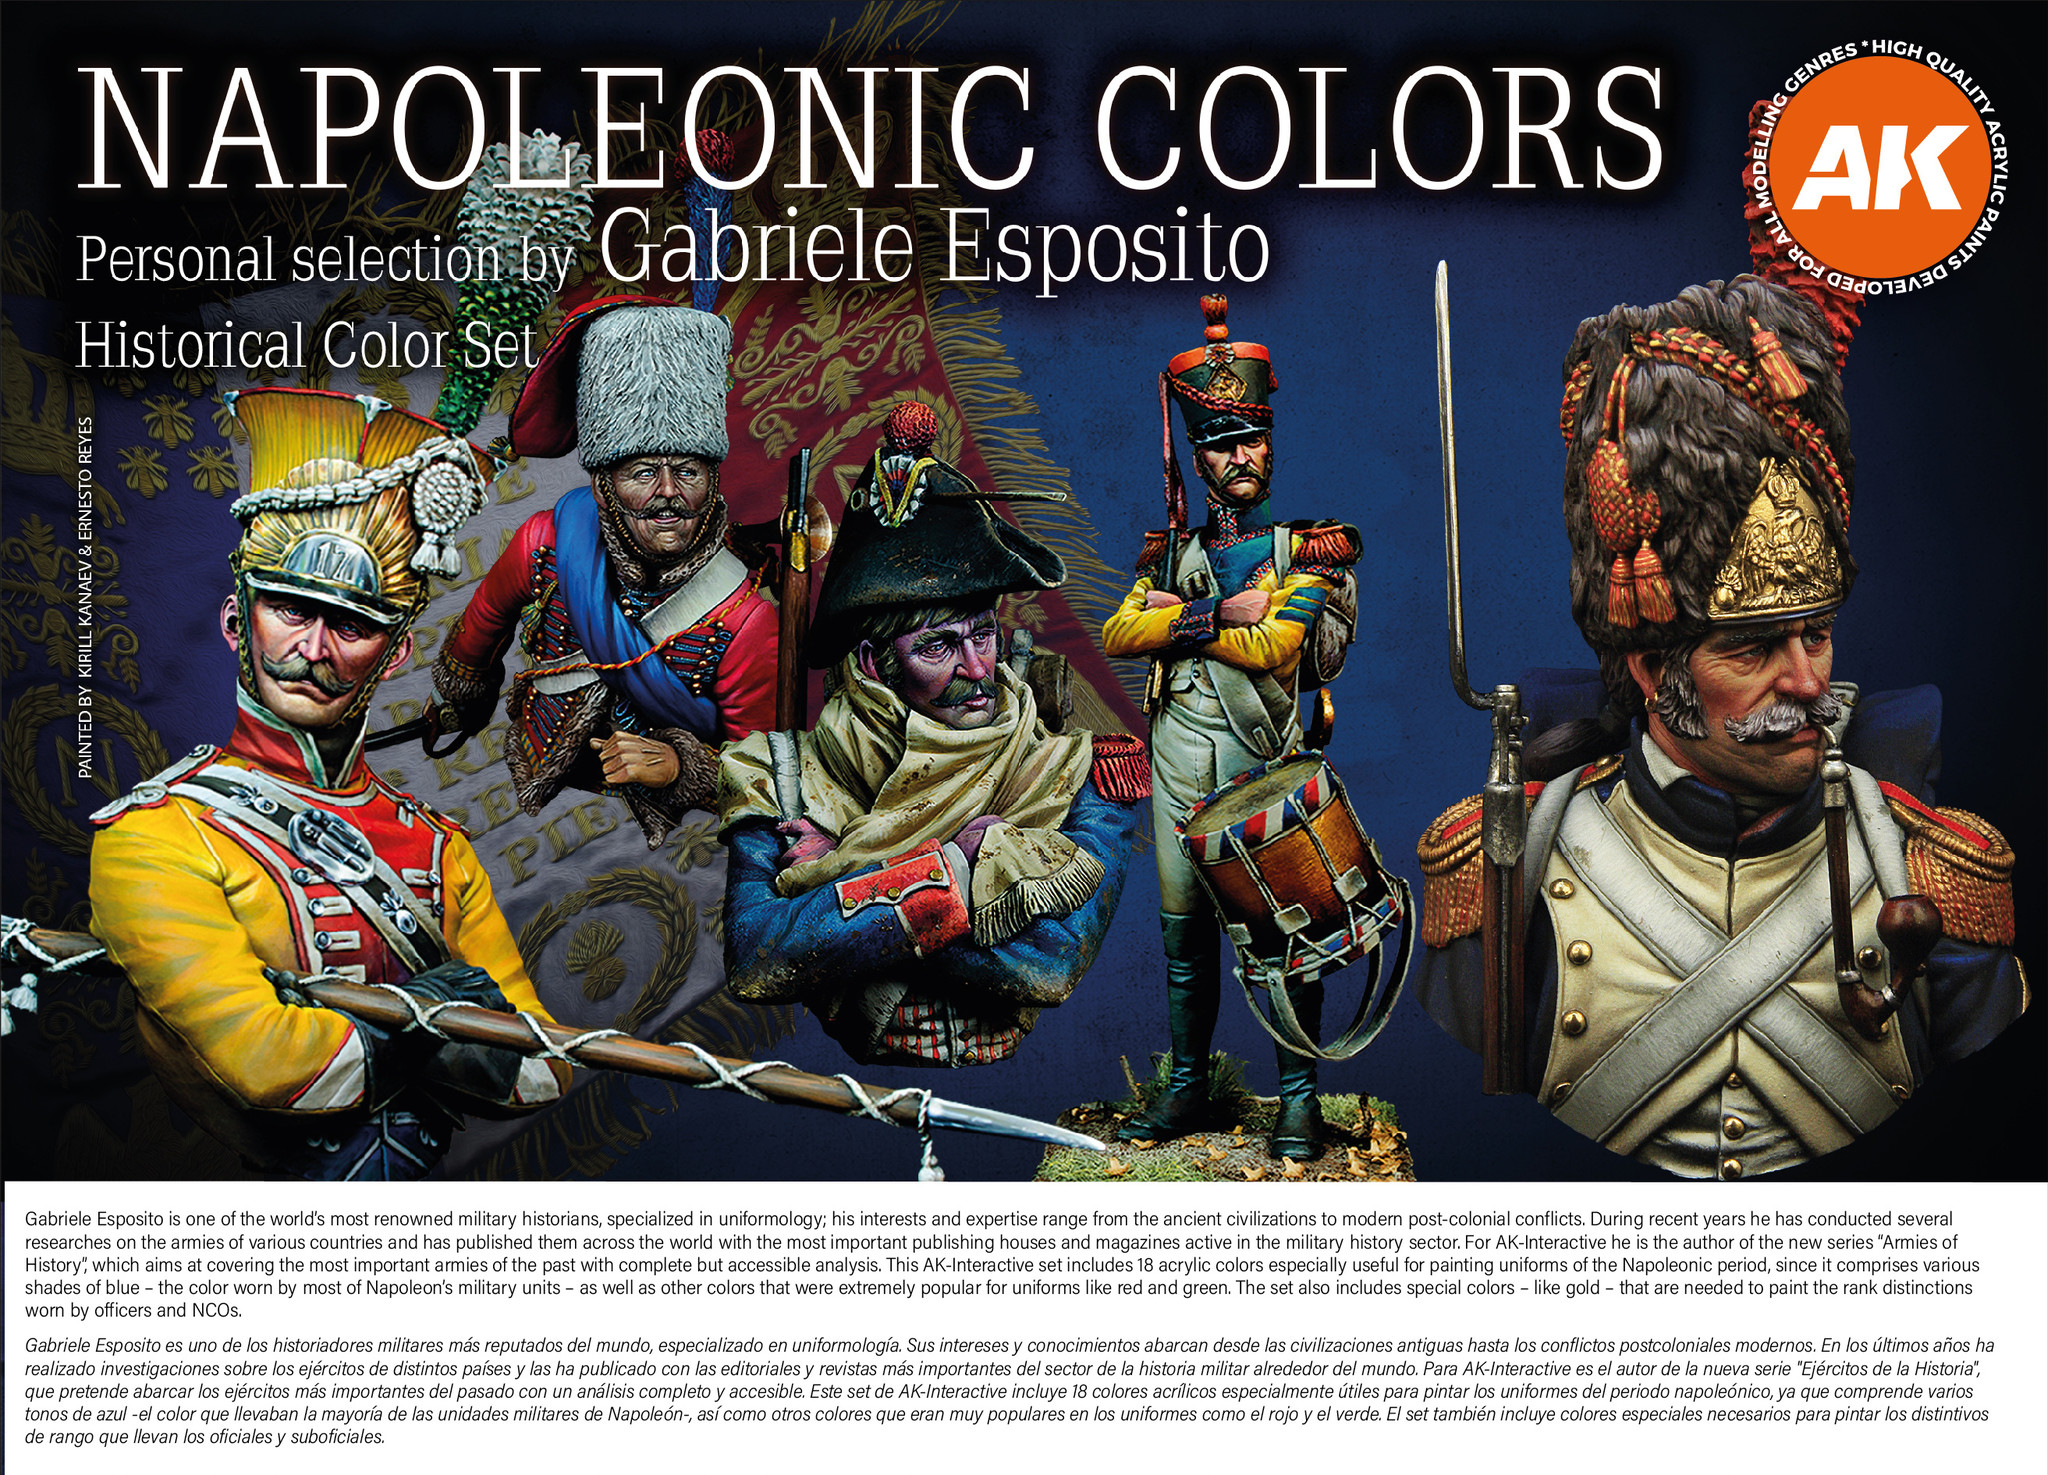 AK-Interactive 3rd Generation Signature Set - Gabriele Esposito - Napoleonic Colors  - AK-Interactive - AK-11772